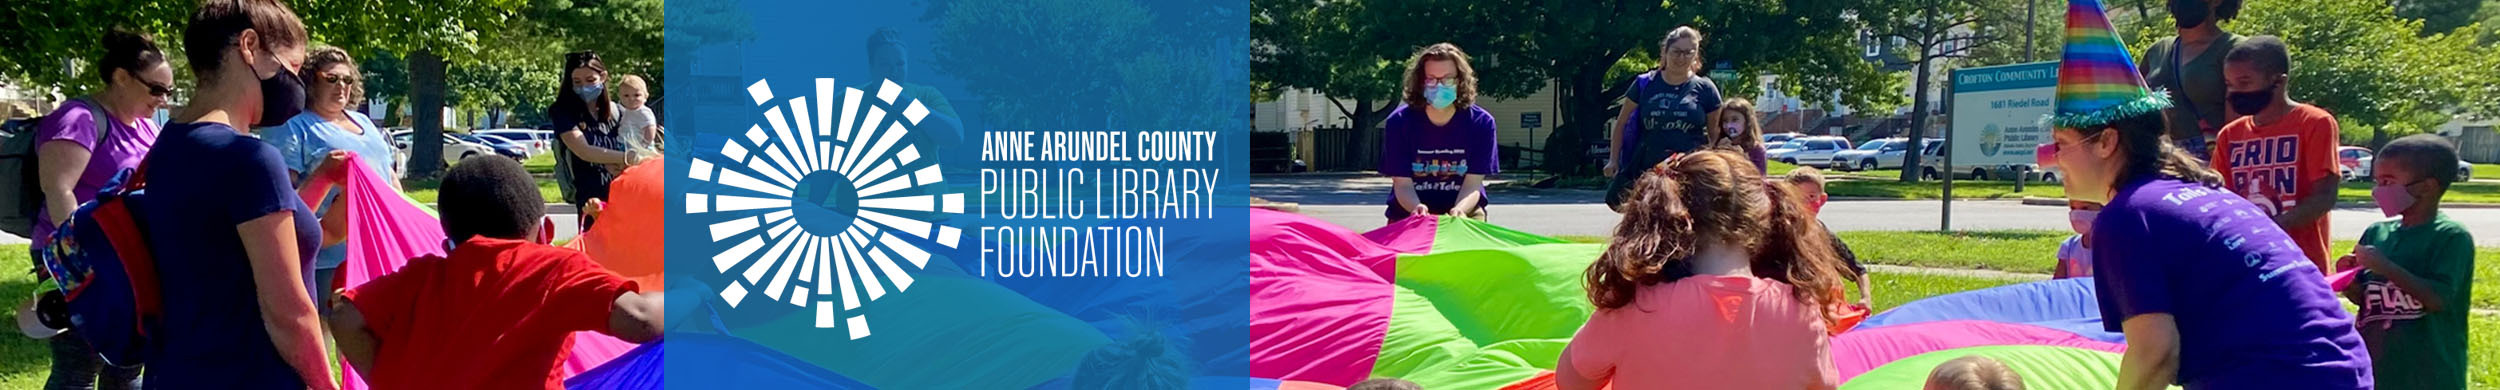 Anne Arundel County Public Library Foundation